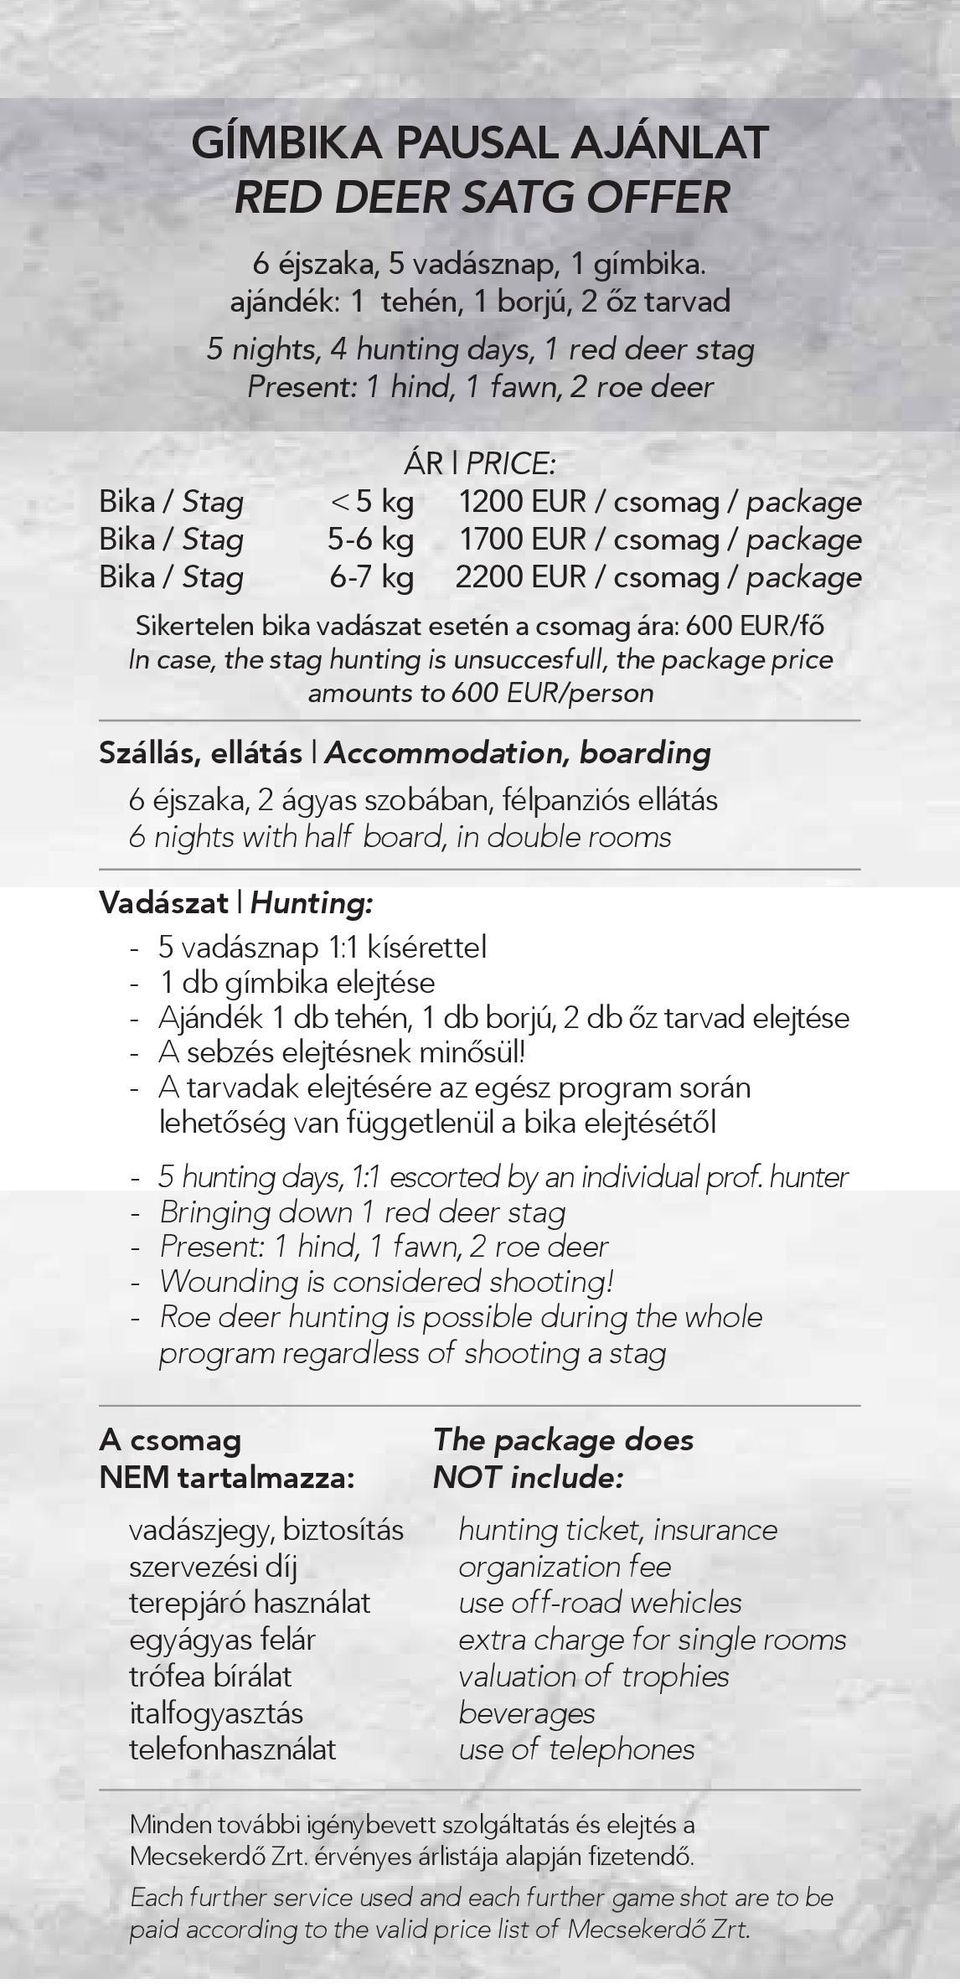 EUR / csomag / package Bika / Stag 6-7 kg 2200 EUR / csomag / package Sikertelen bika vadászat esetén a csomag ára: 600 EUR/fő In case, the stag hunting is unsuccesfull, the package price amounts to